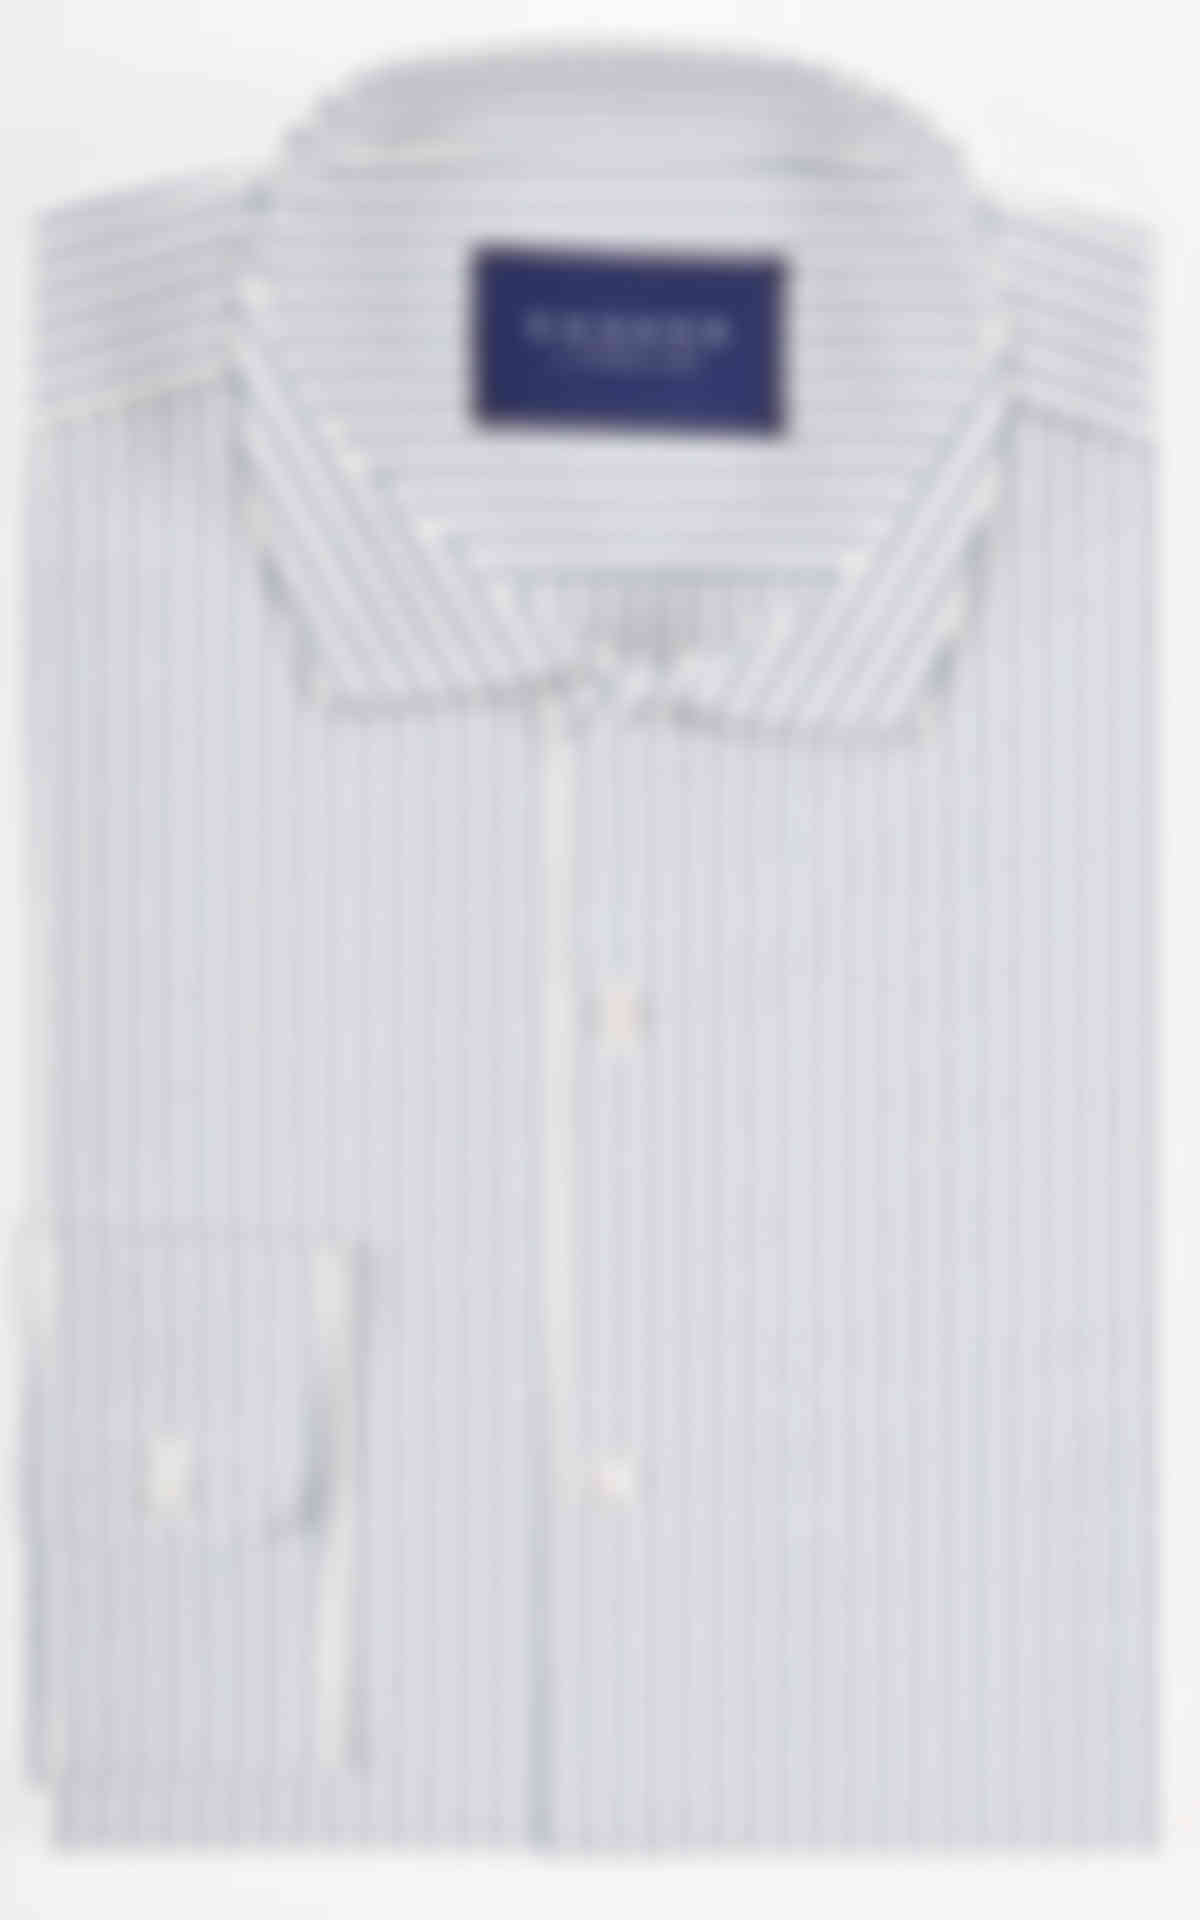 Blue Pinstripe Shirt